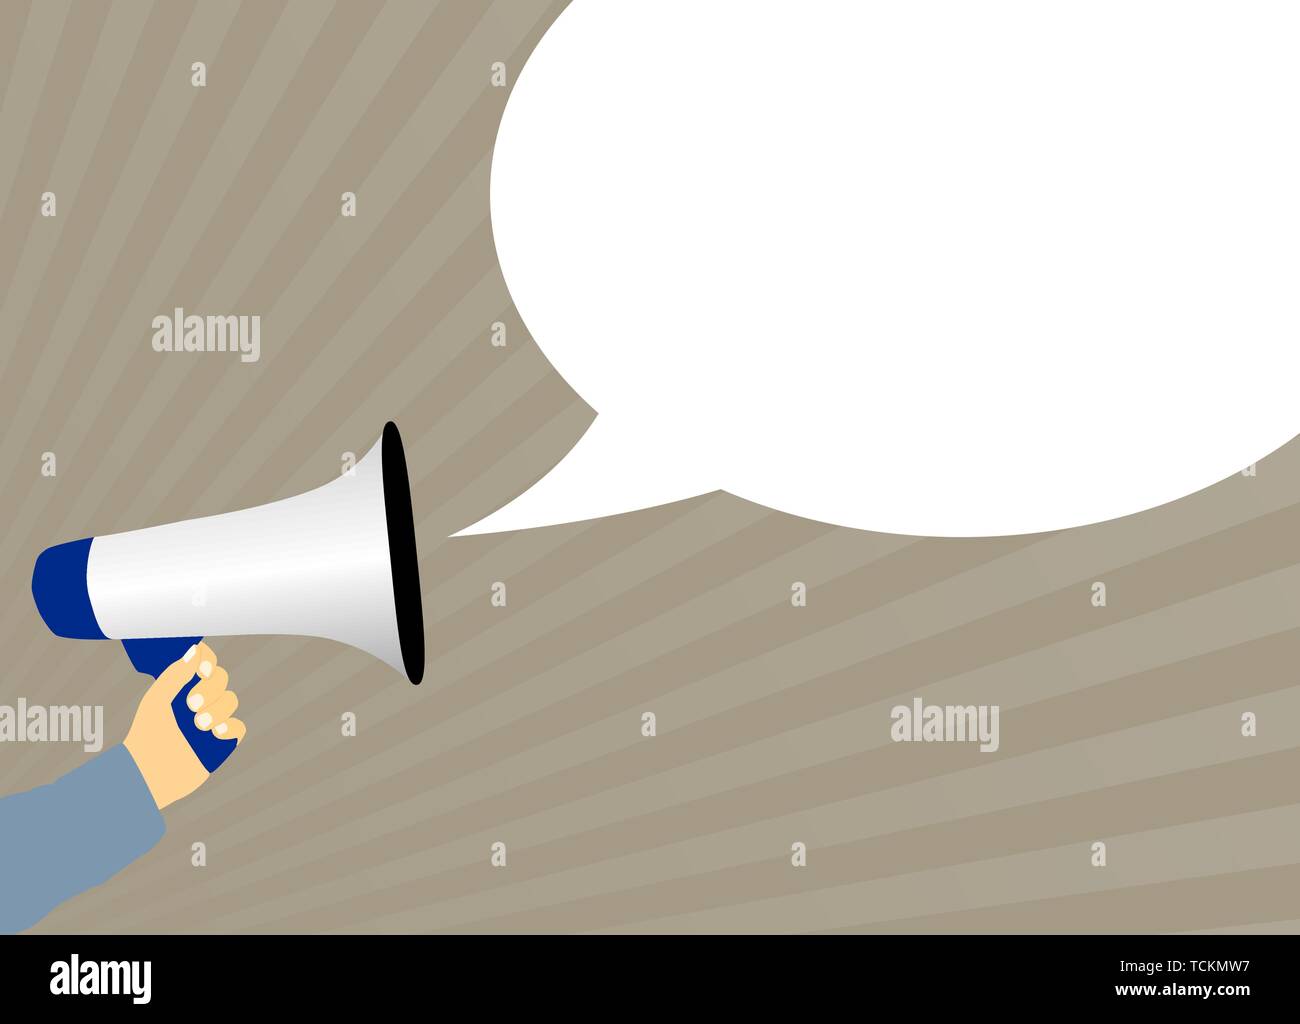 hand holding megaphone or bullhorn with speech bubble vector illustration Stock Vector